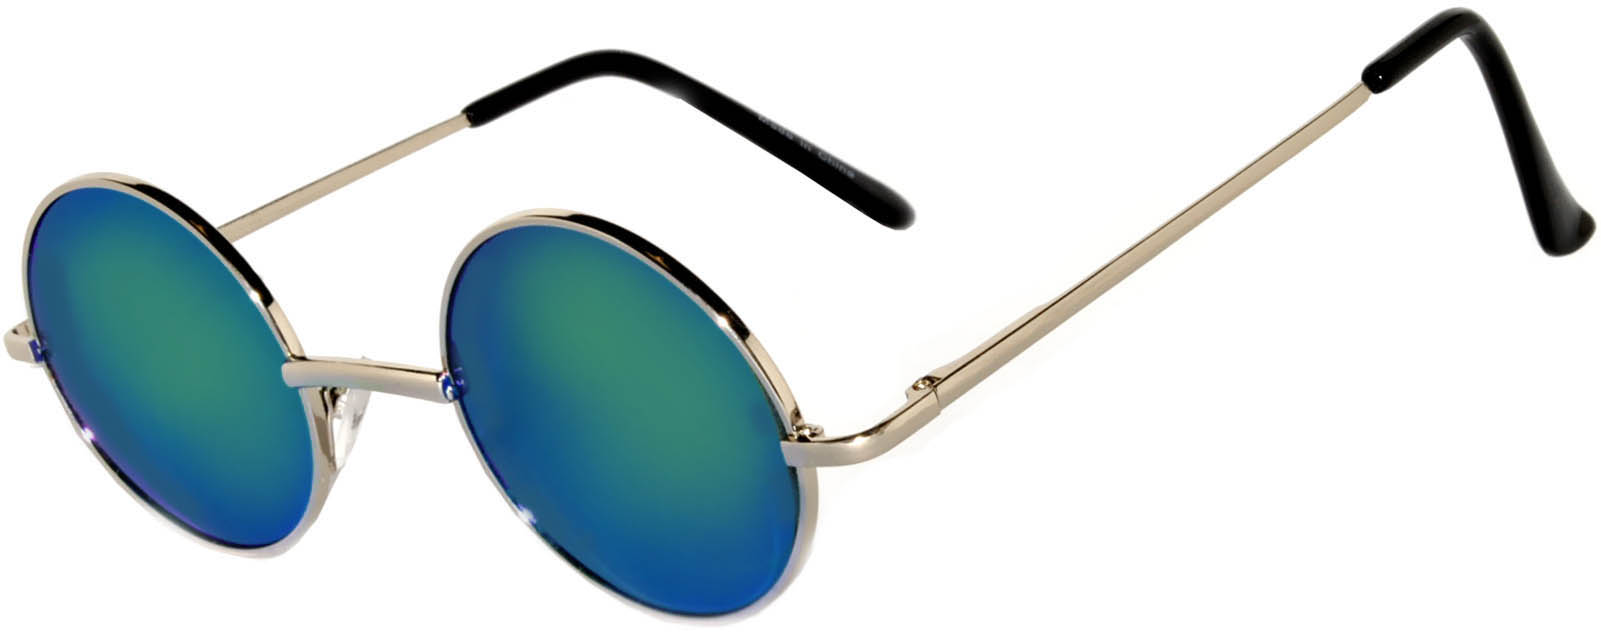 OWL ® Eyewear Sunglasses 43mm Women’s Metal Round Circle Silver Frame Mirror Blue-Green Lens One Pair - image 1 of 2